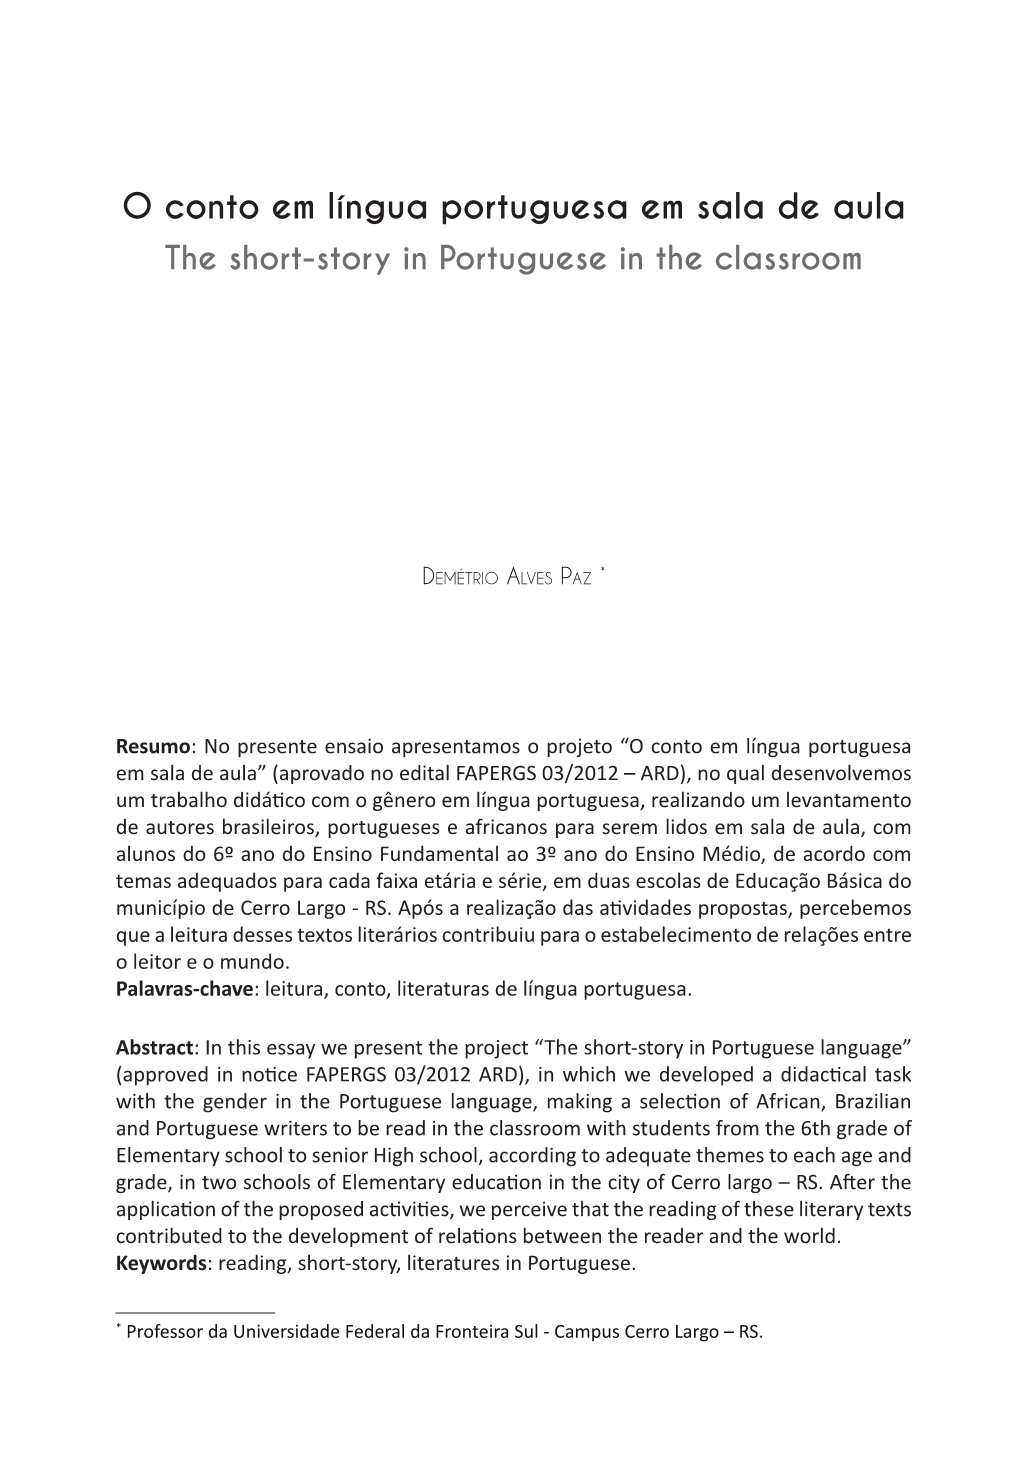 O Conto Em Língua Portuguesa Em Sala De Aula the Short-Story in Portuguese in the Classroom